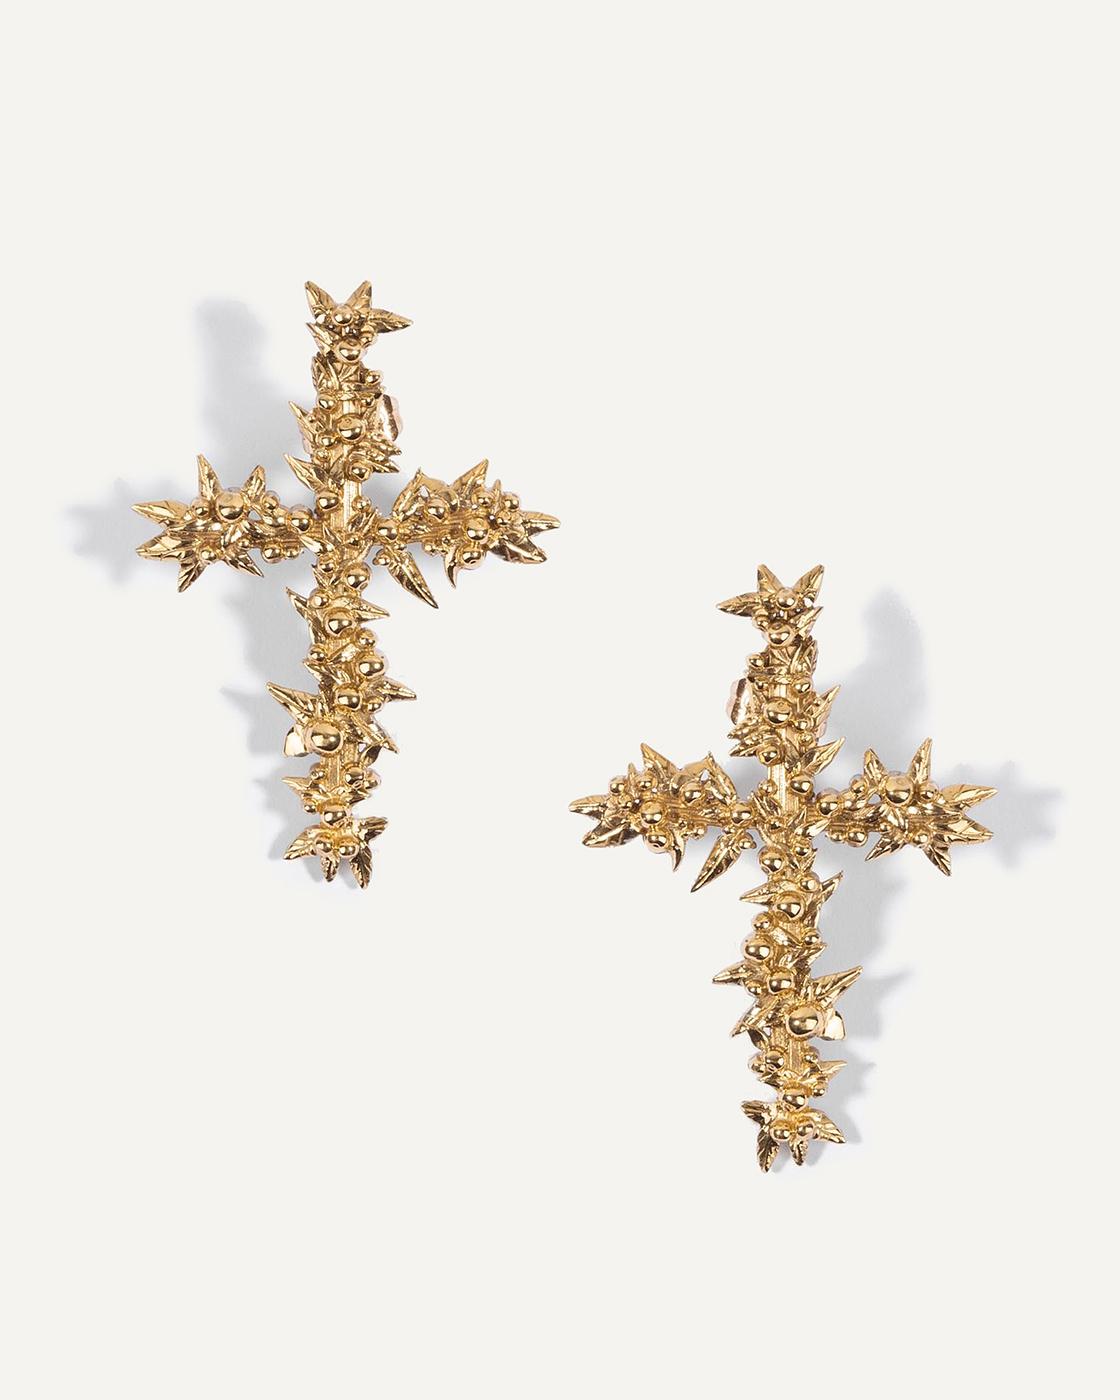 Pair of Solid Bronze Apple Blossom Cross Earrings